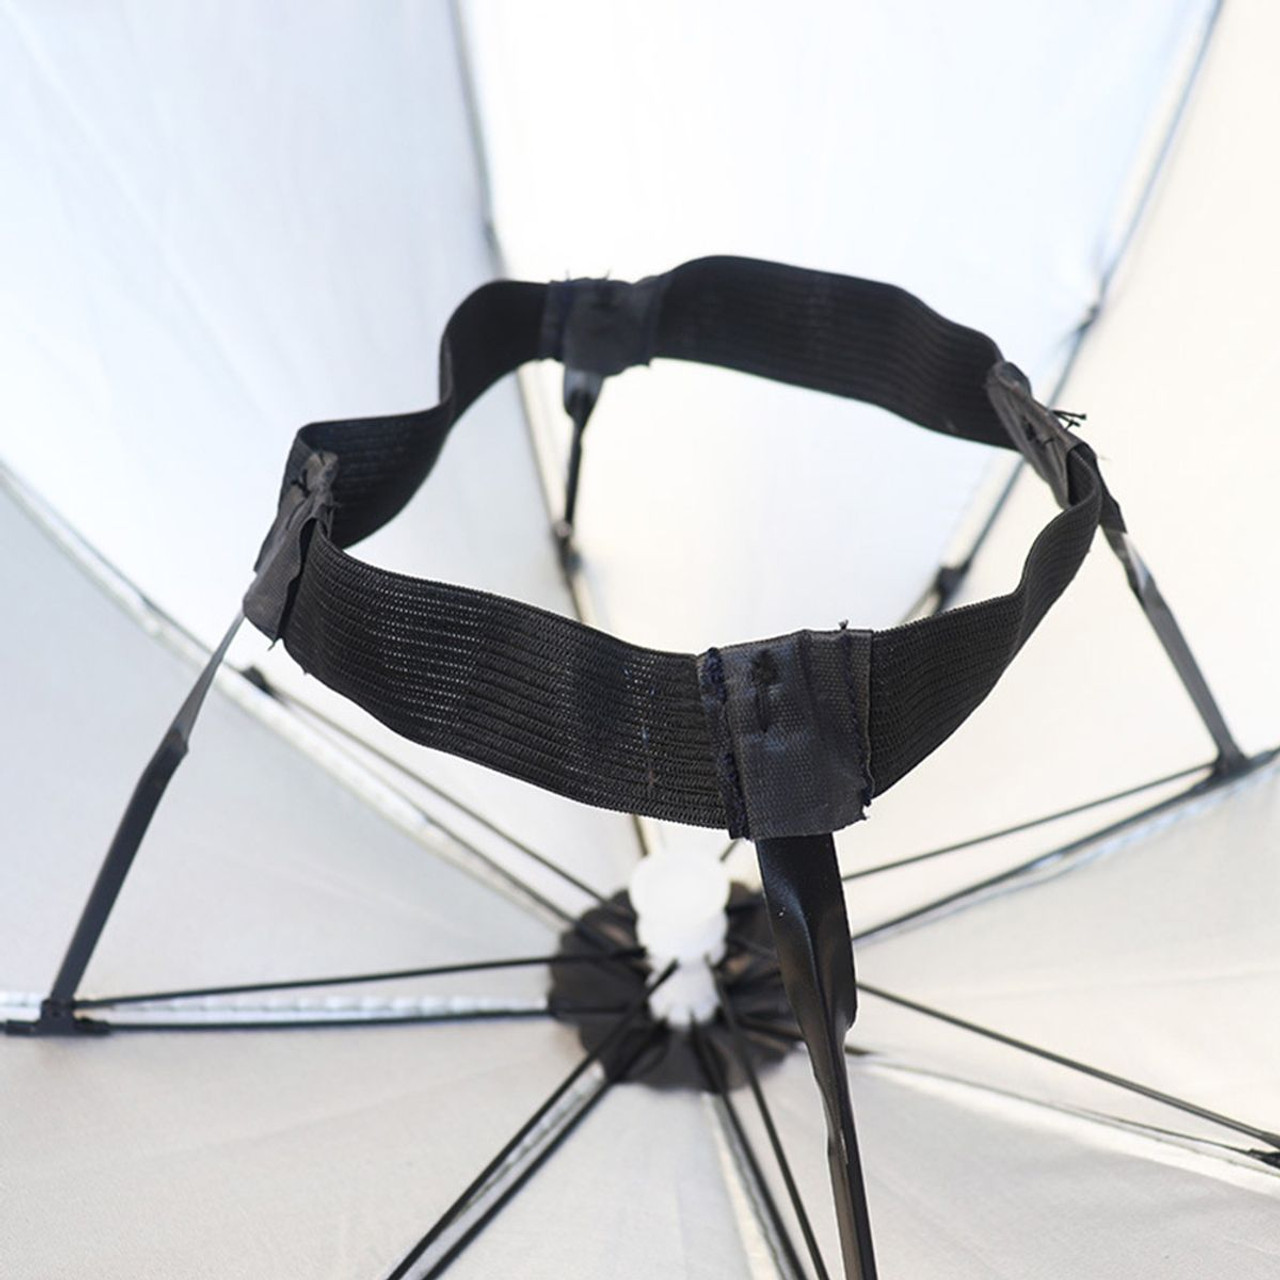 Quick Shade Personal Hat Umbrella product image